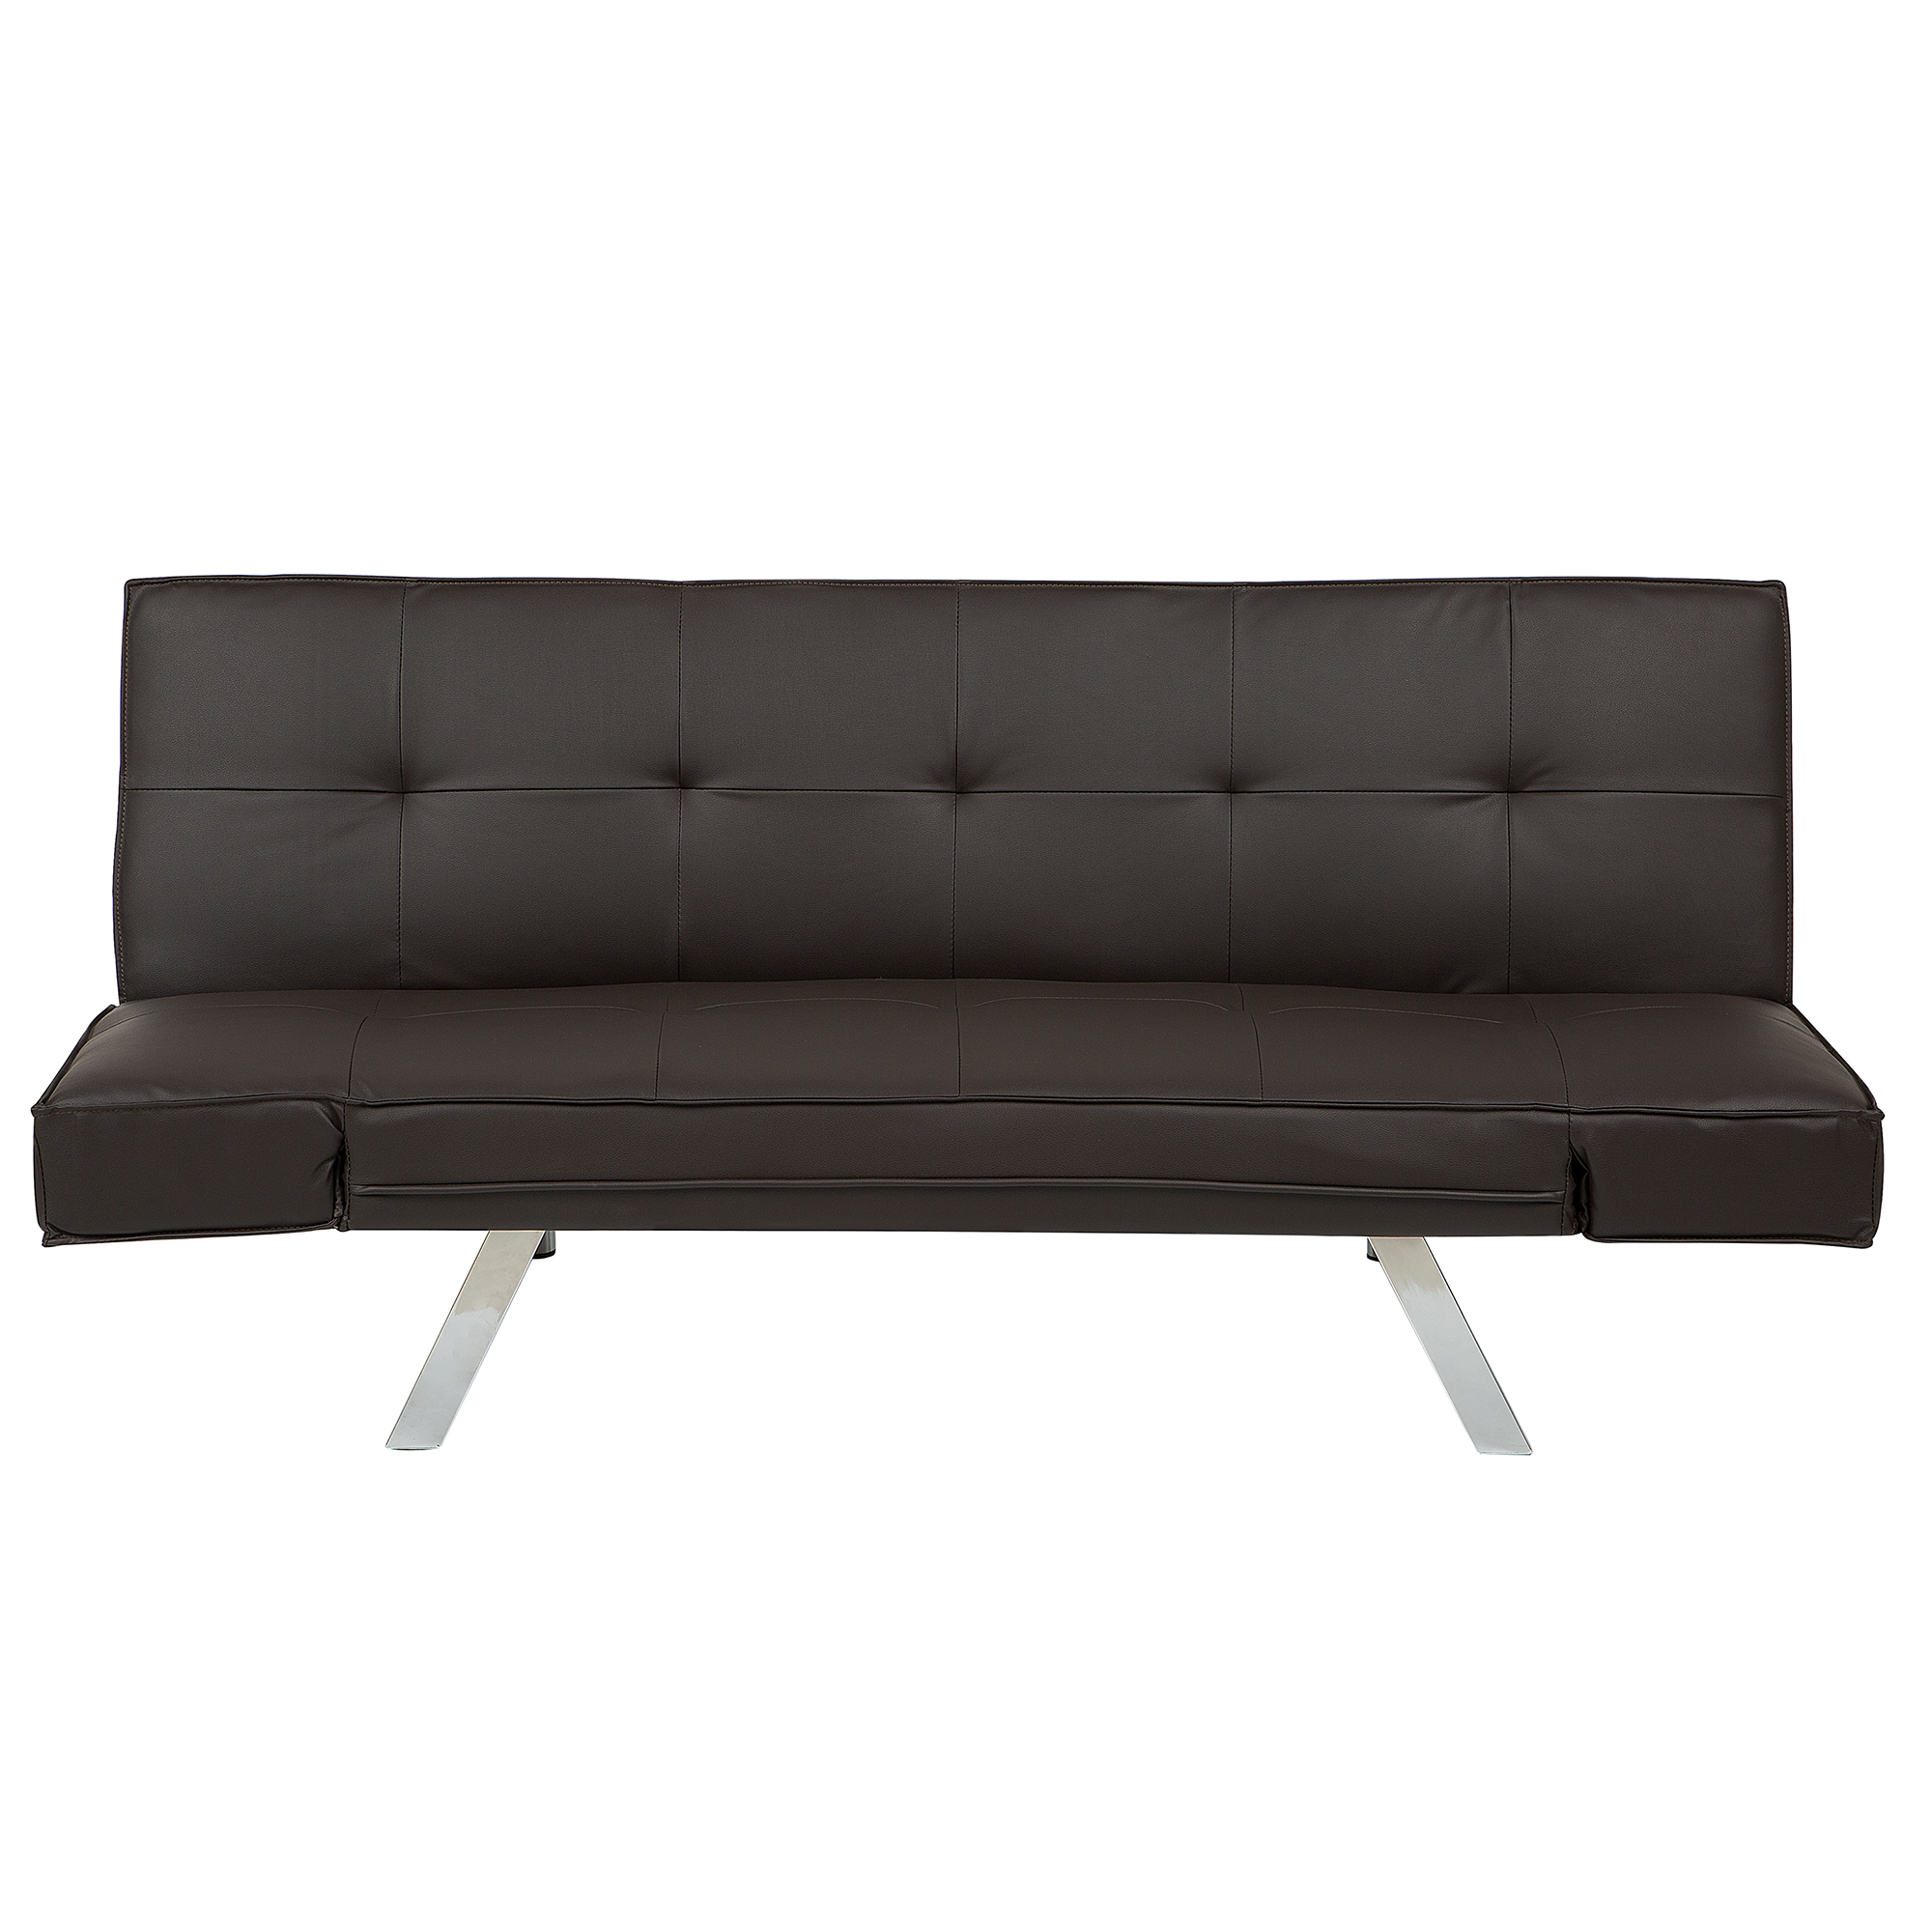 Beliani 3 Seater Sofa Bed Black Faux Leather Armless Modern